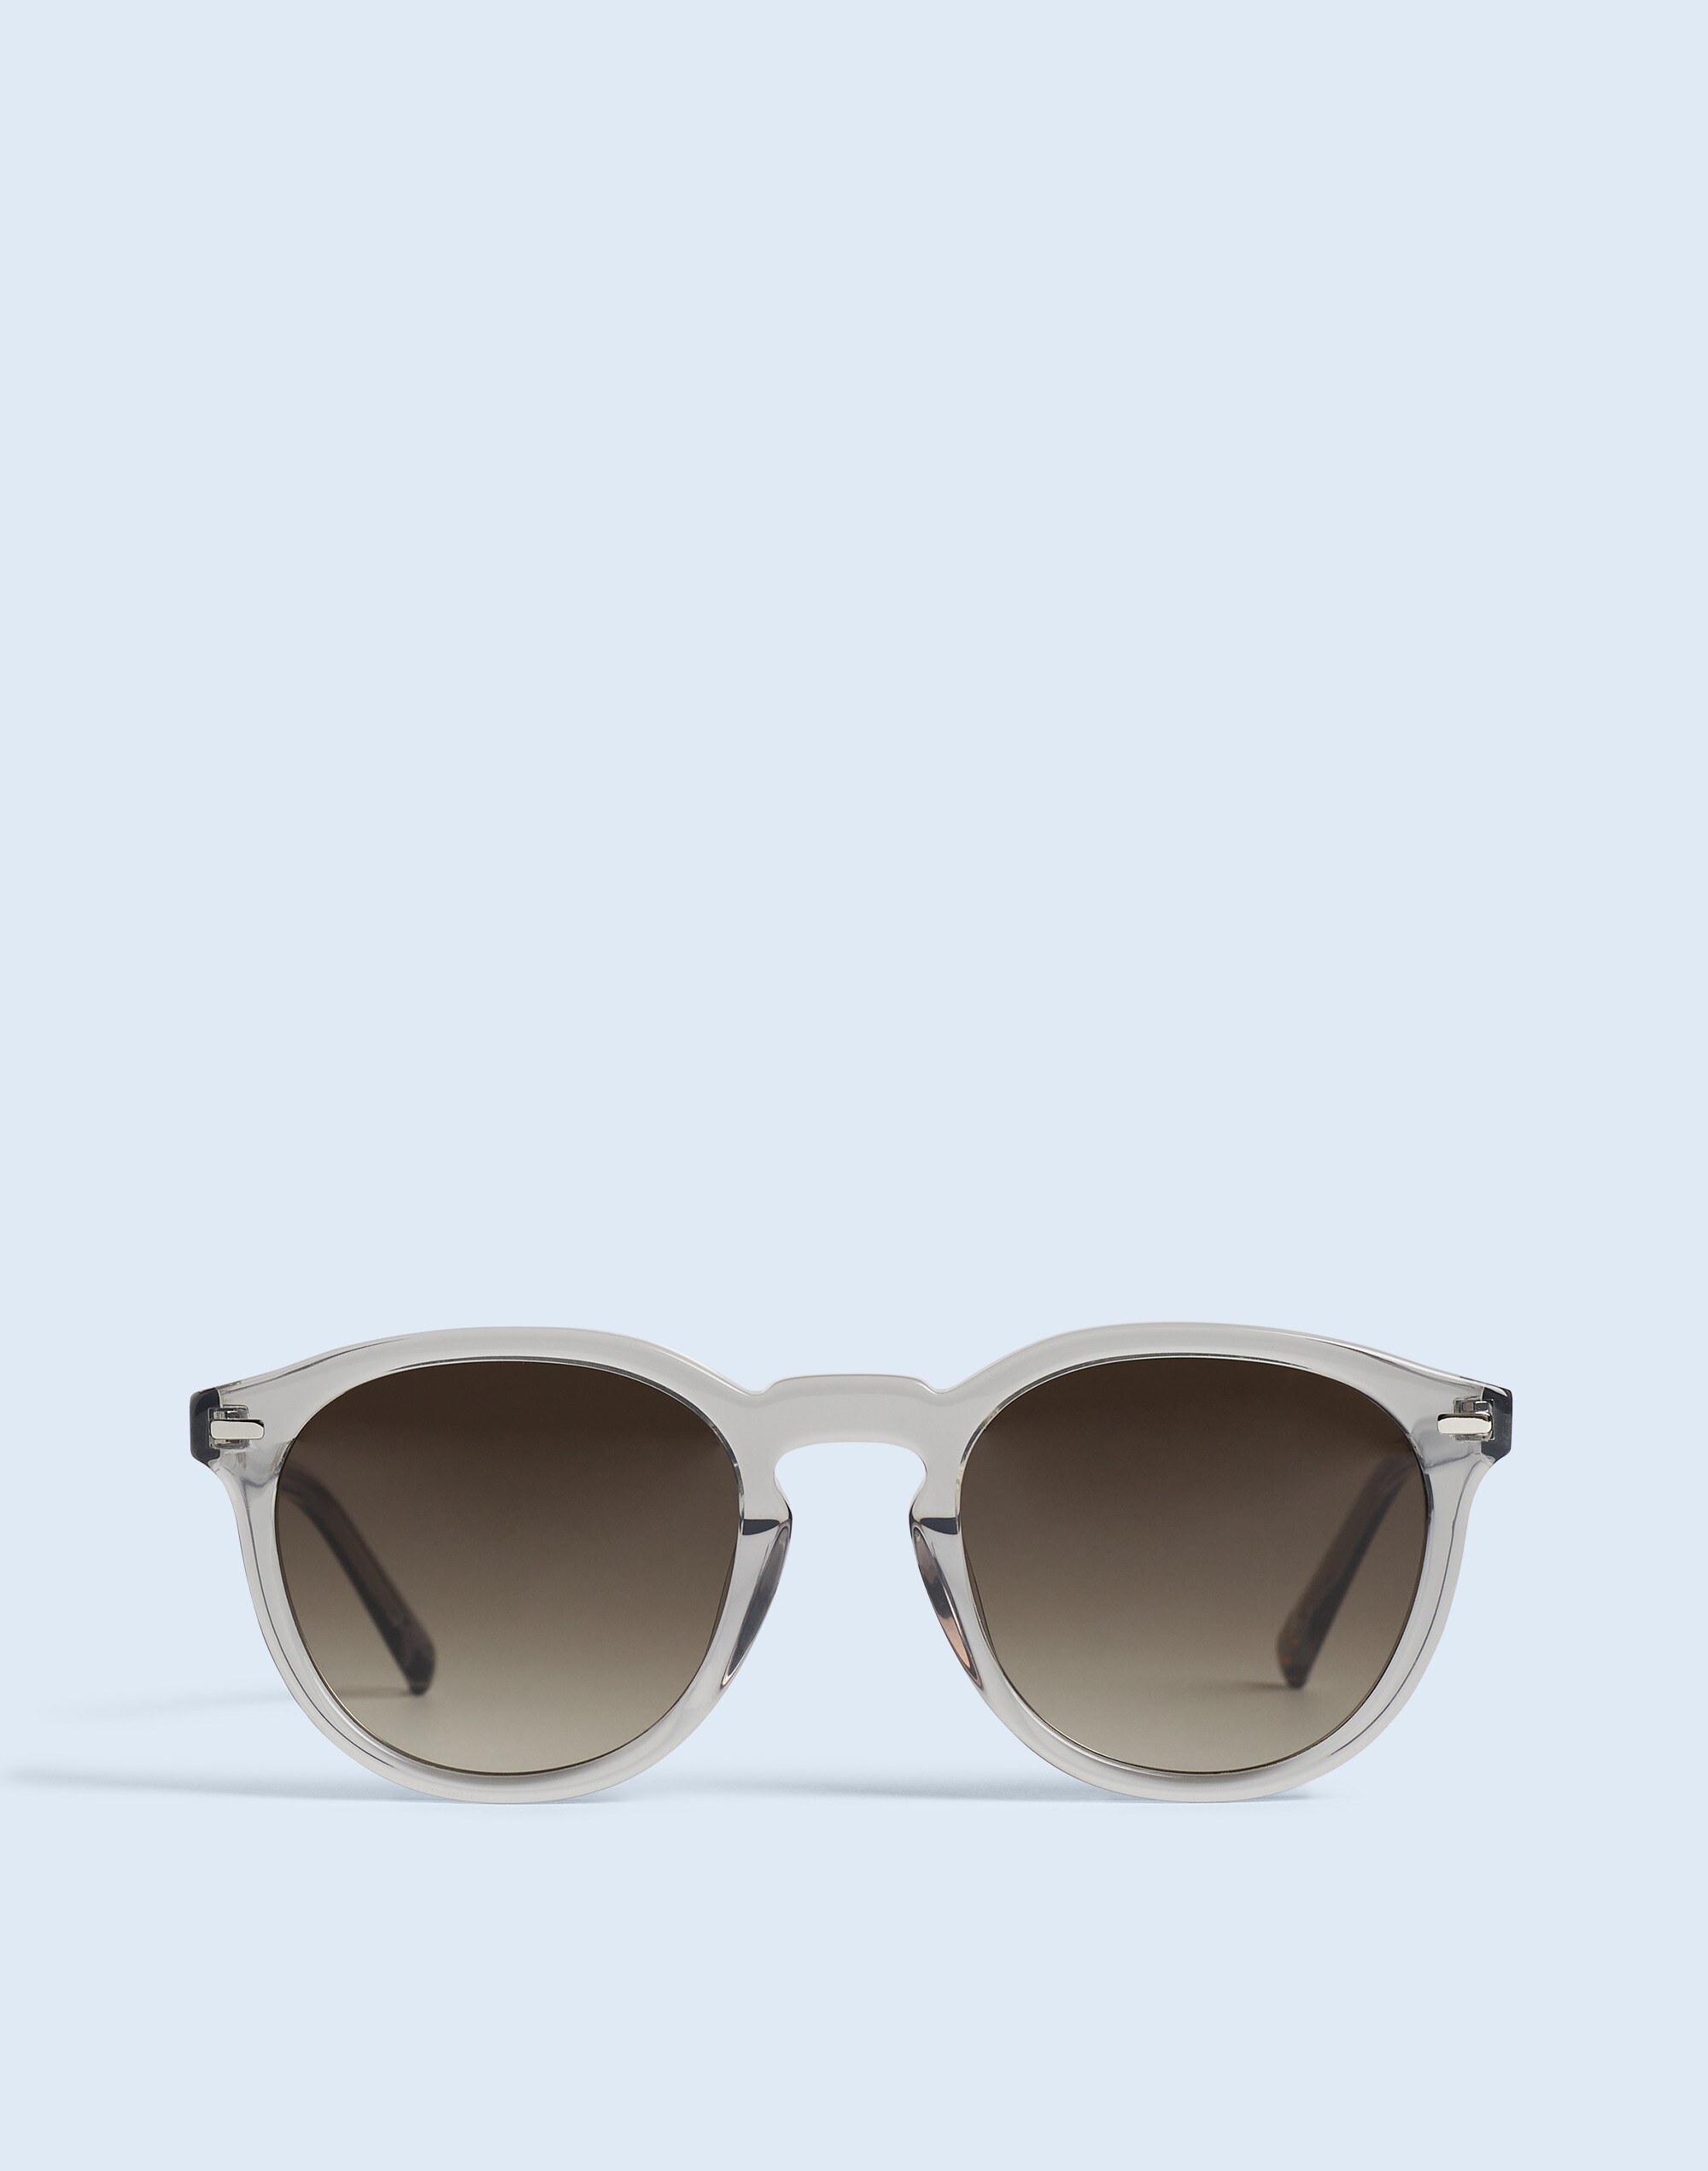 Mw Round Acetate Sunglasses In Brown